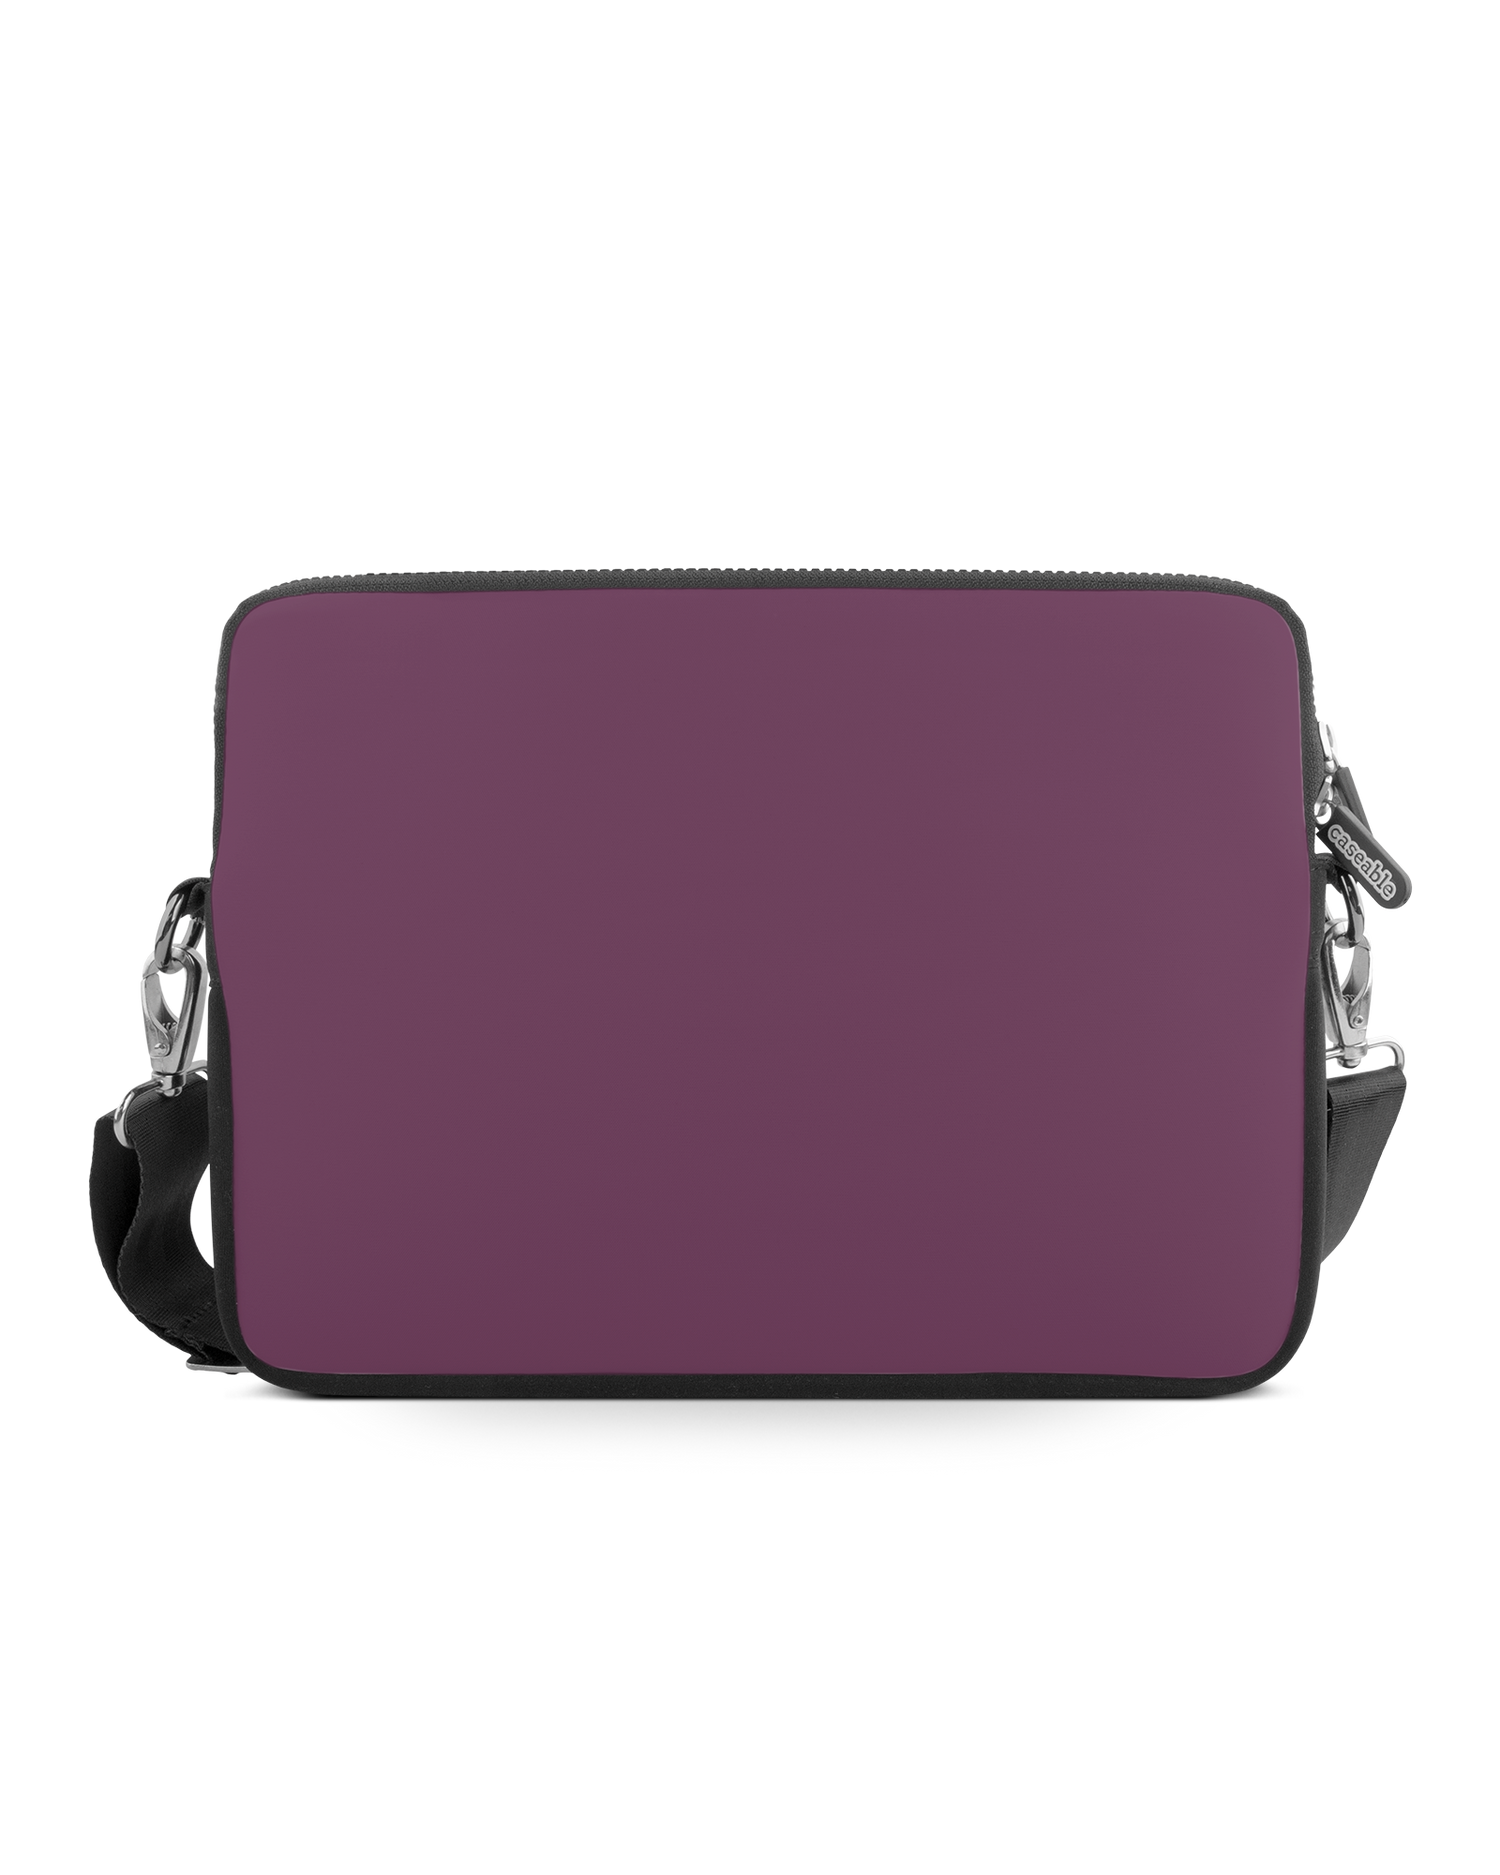 PLUM Premium Laptop Bag 15 inch: Front View